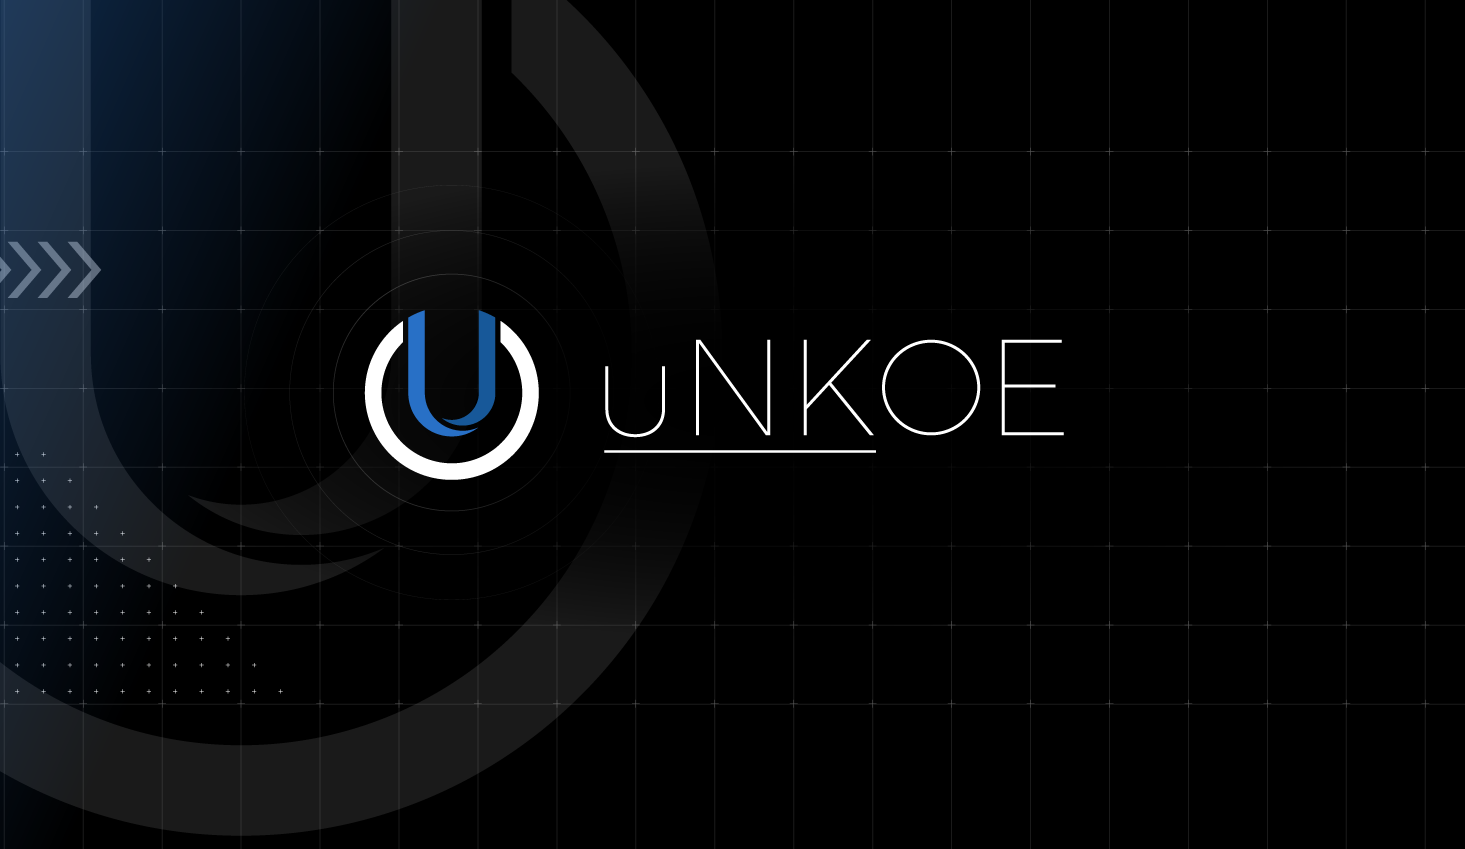 uNKOE branding